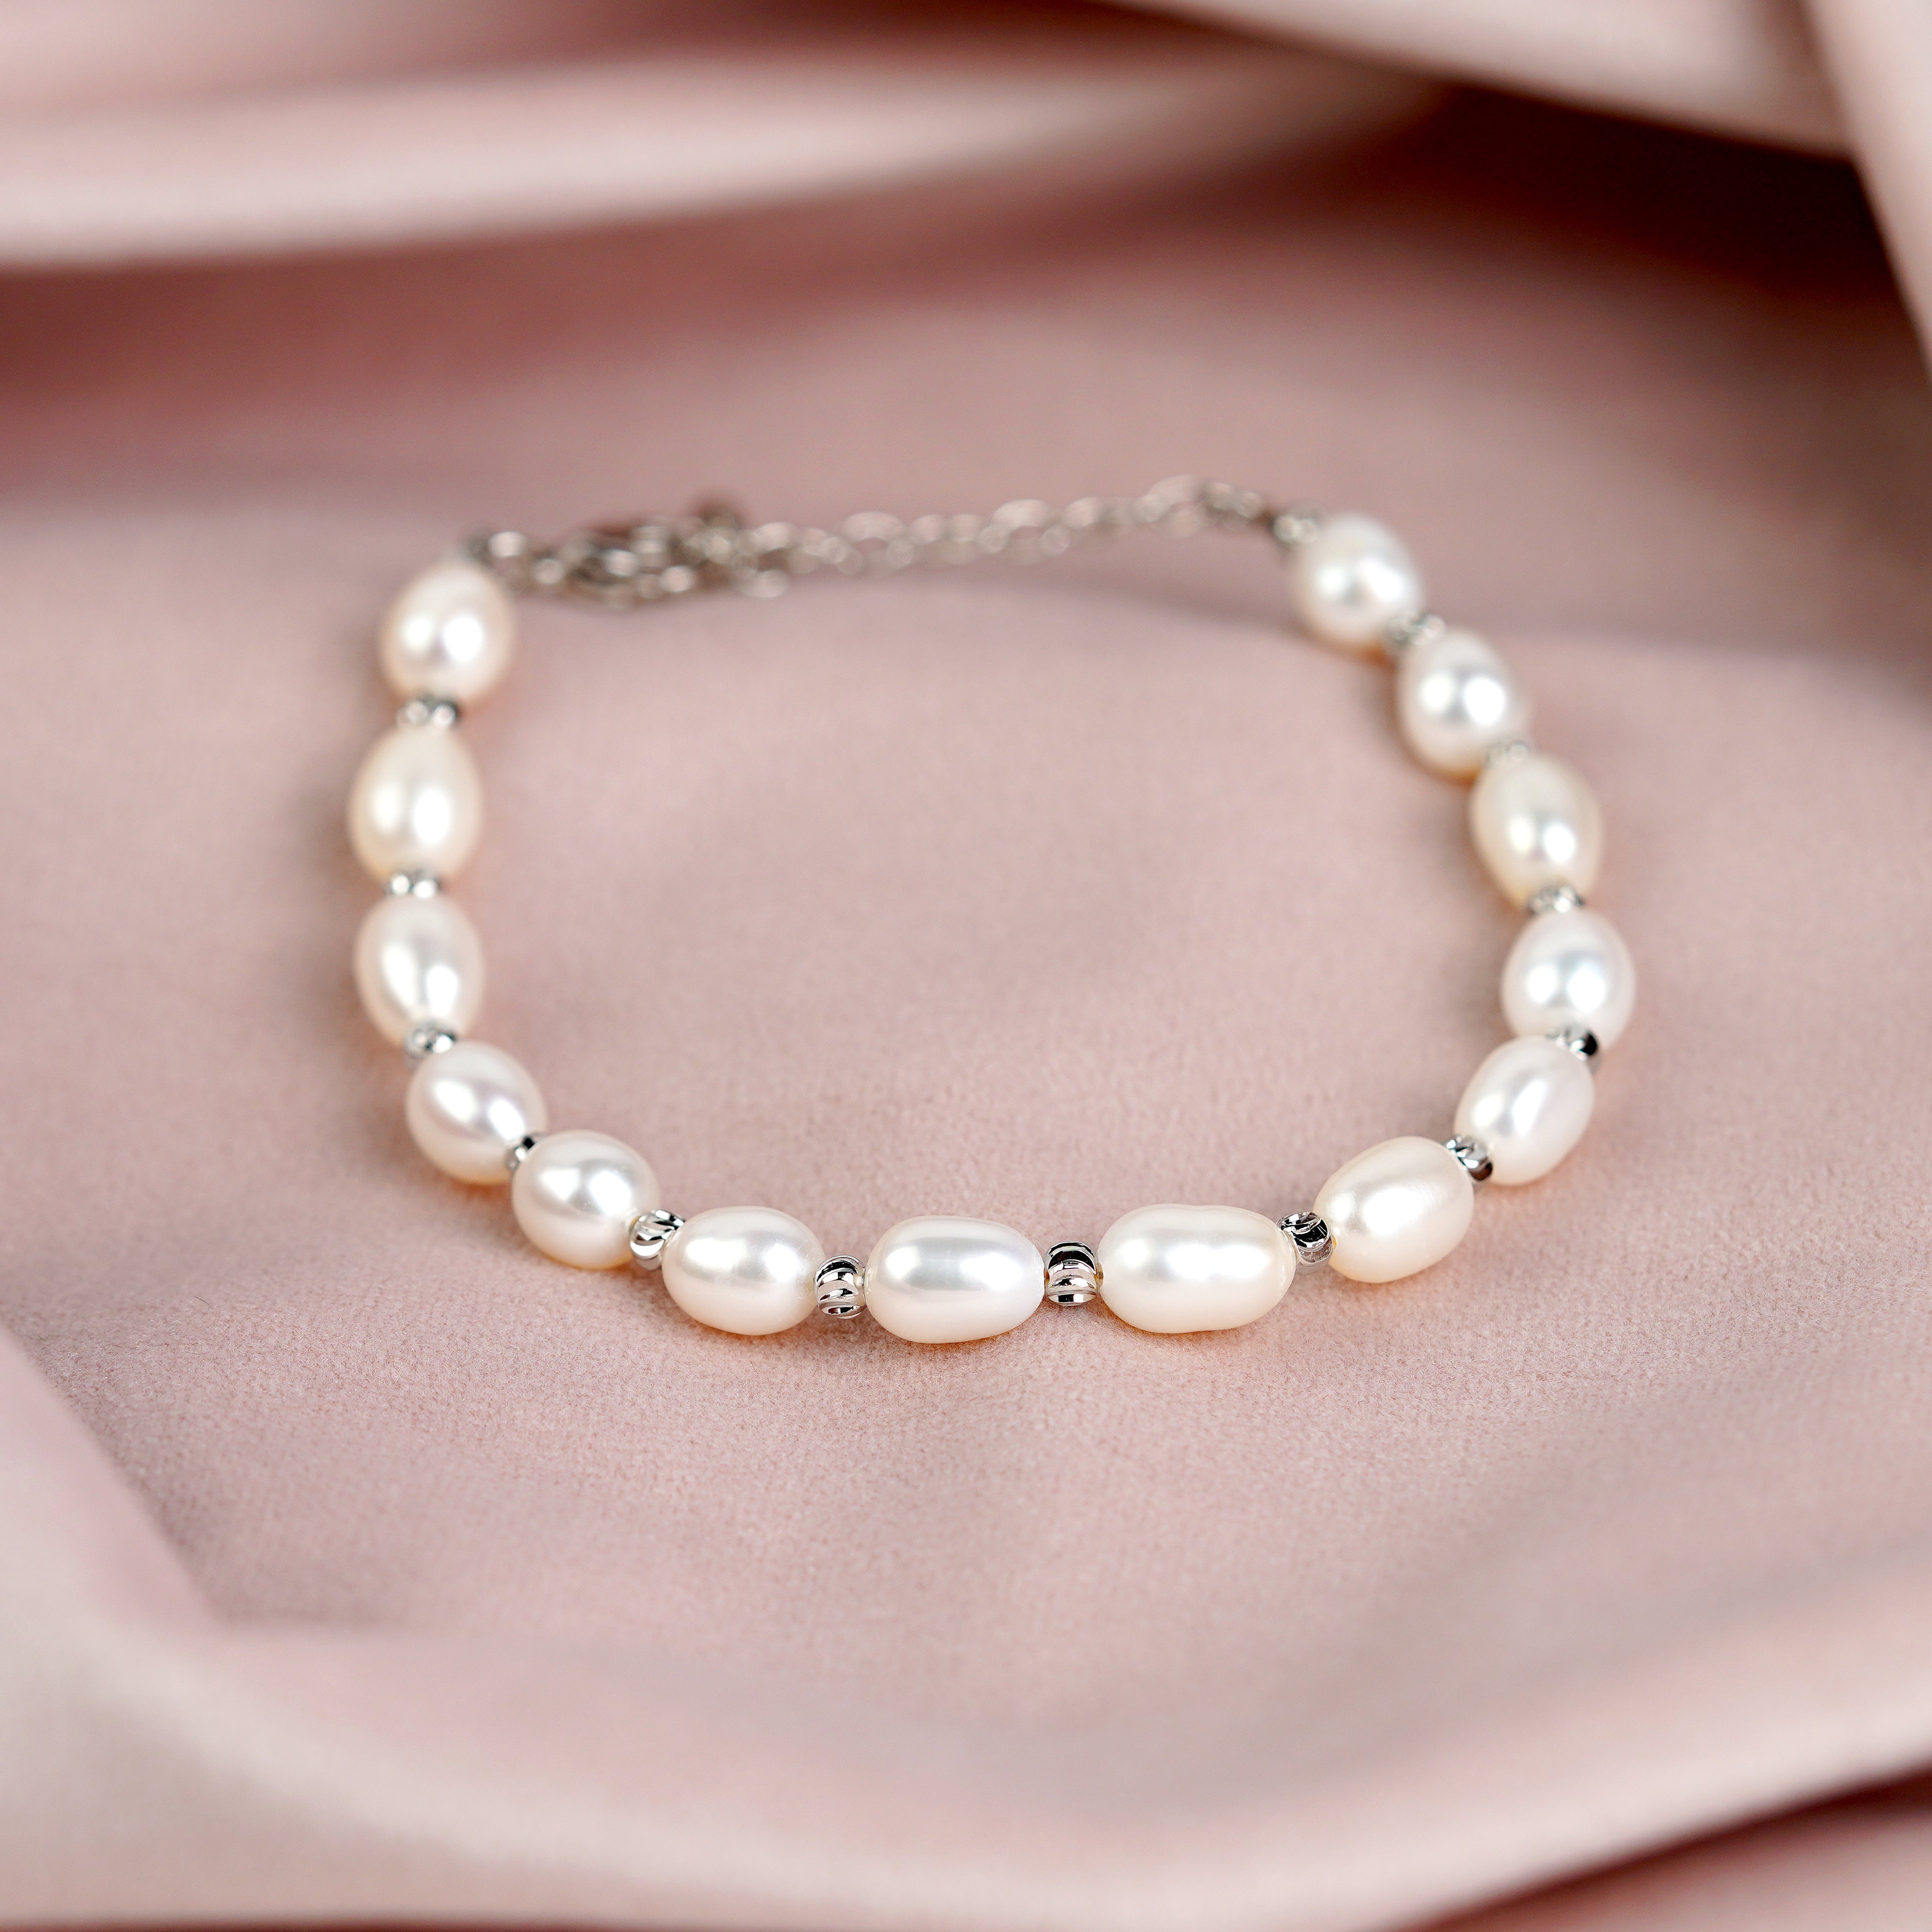 Timeless Elegance in Silver Pearl Bracelet